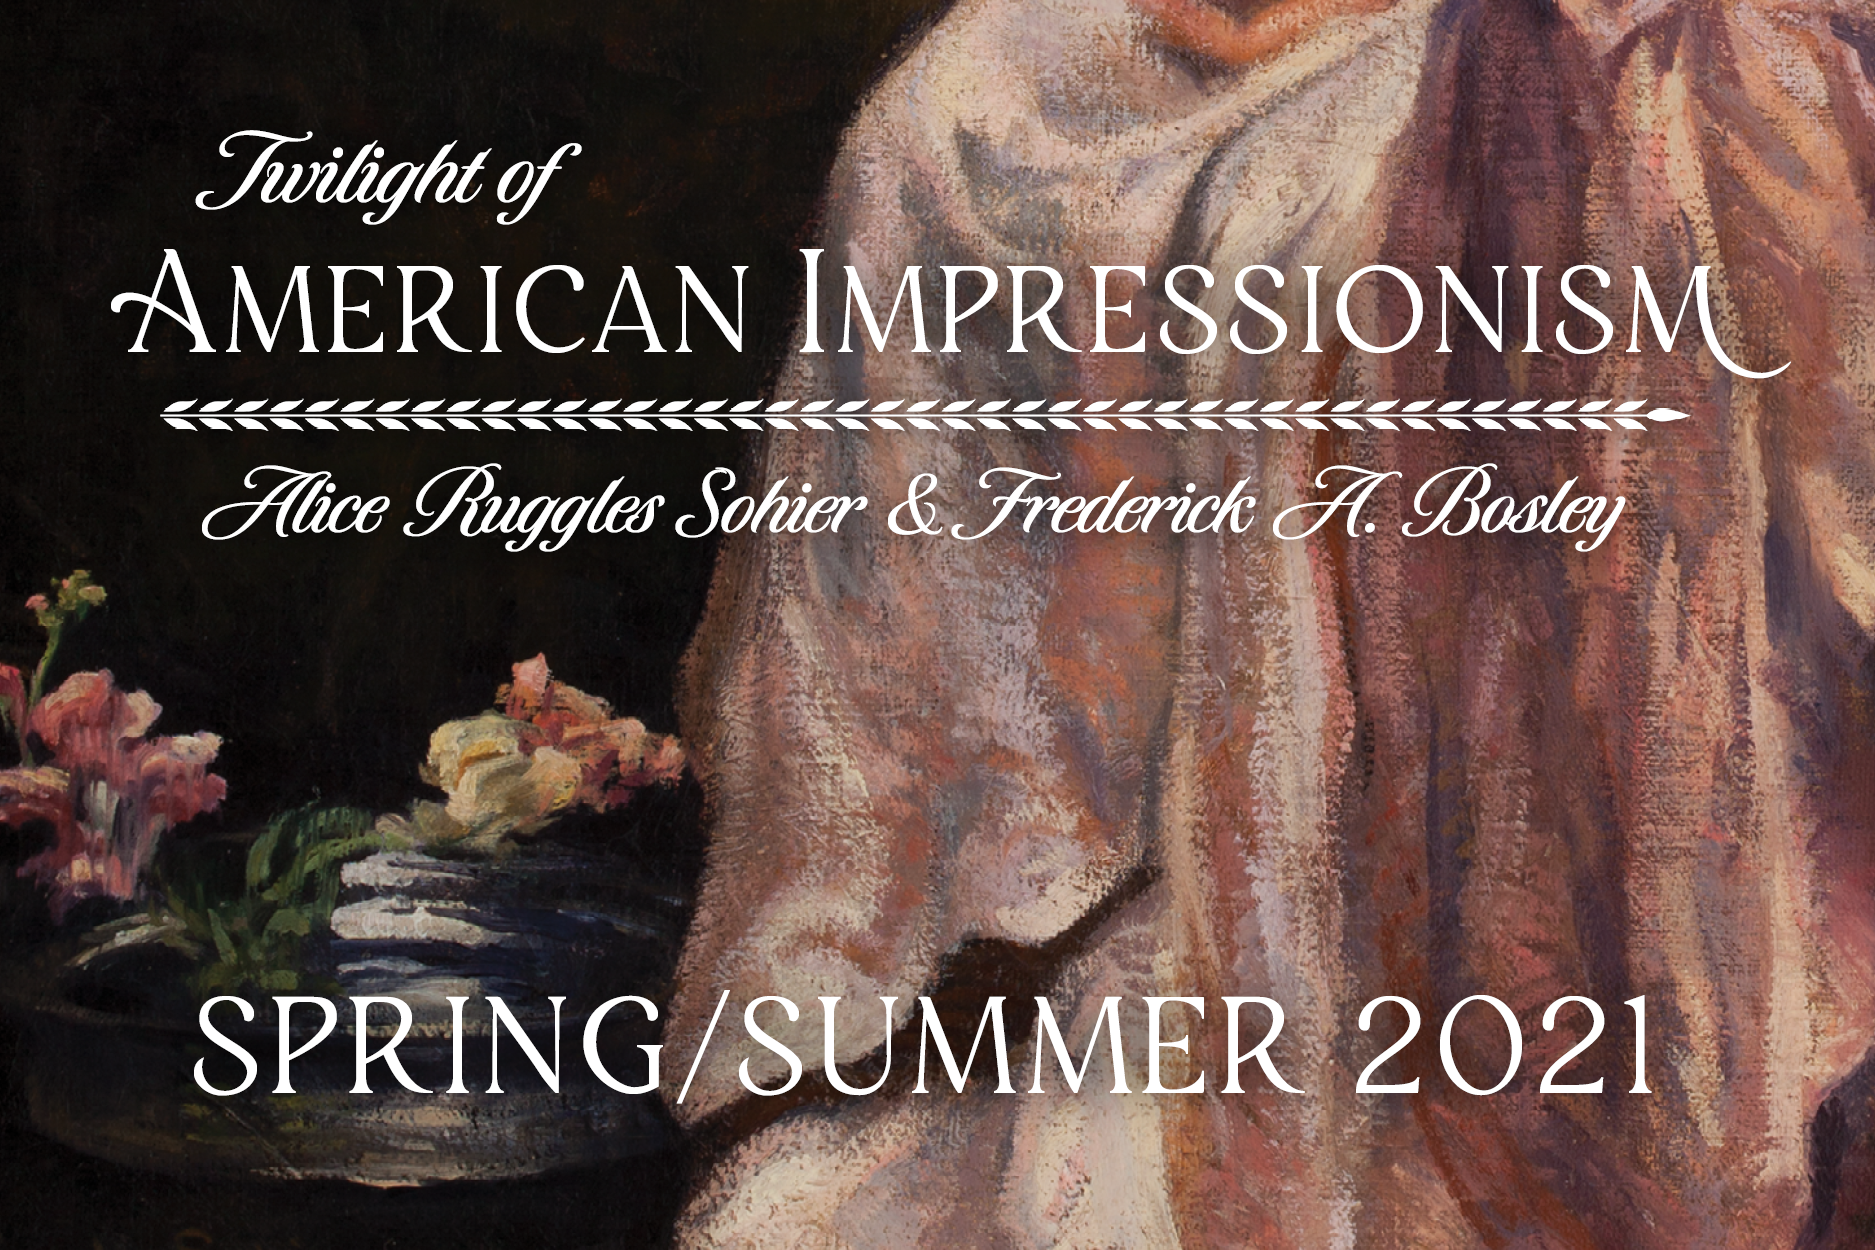 “Twilight of American Impressionism”